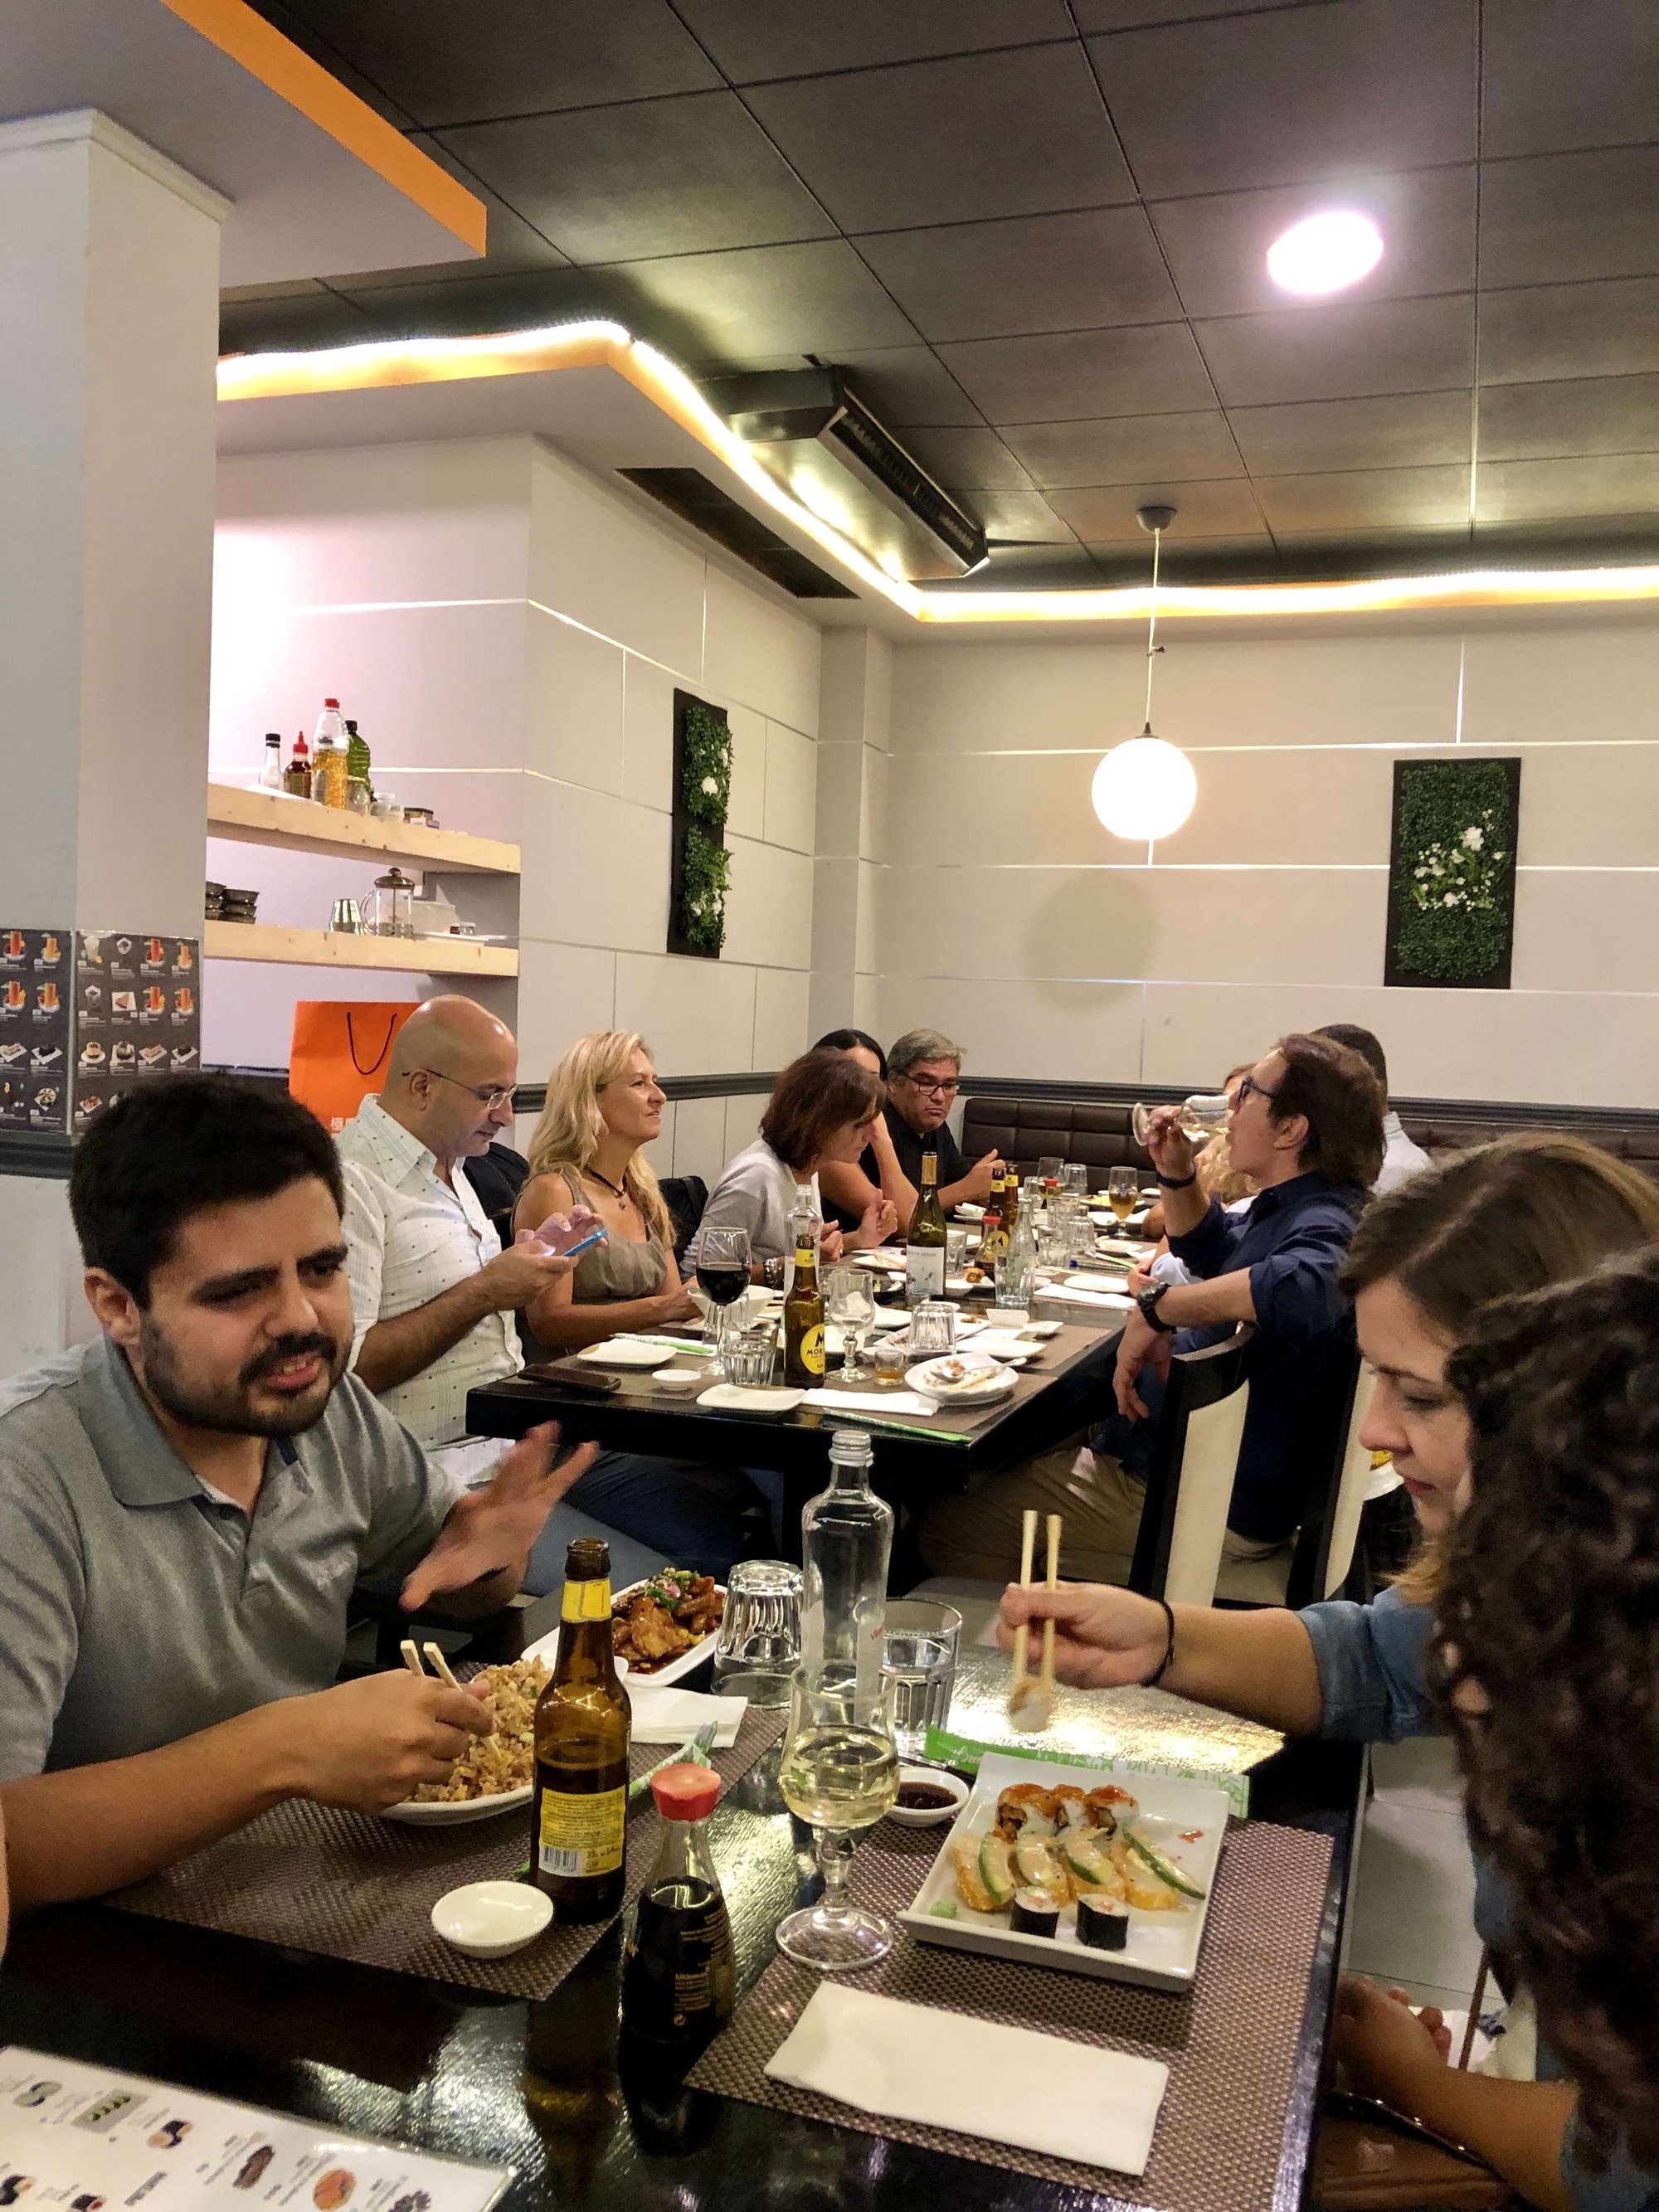 People eating at Art i Sushi amb Miroslavo, Barcelona